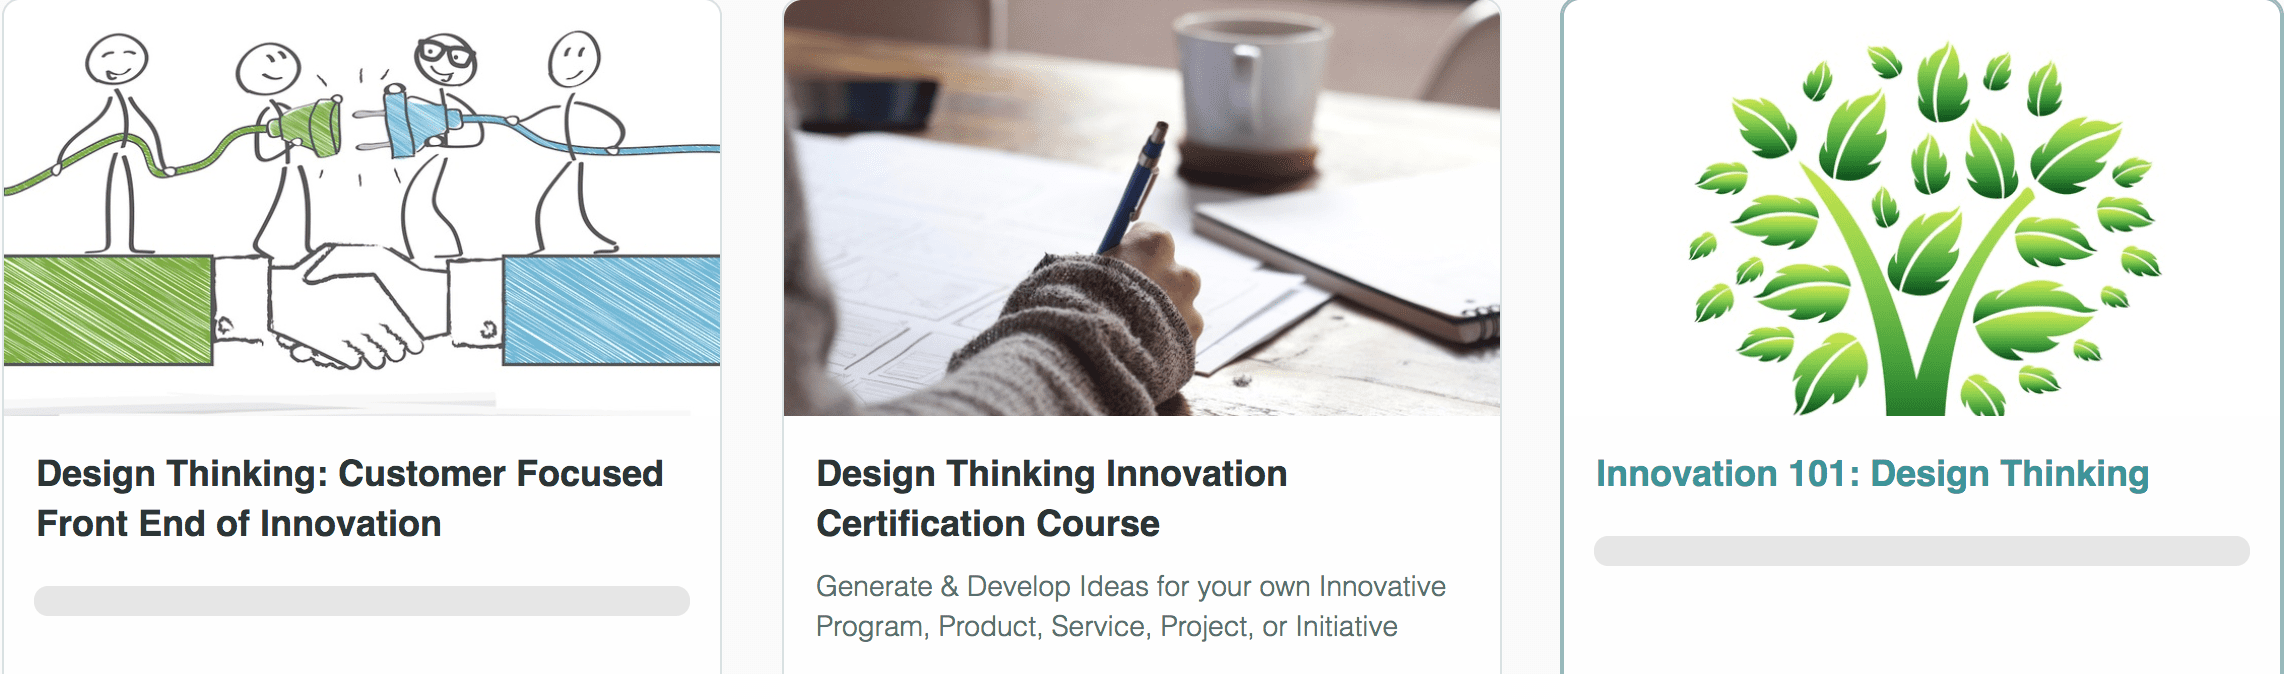 Design Thinking & Innovation Development through Training